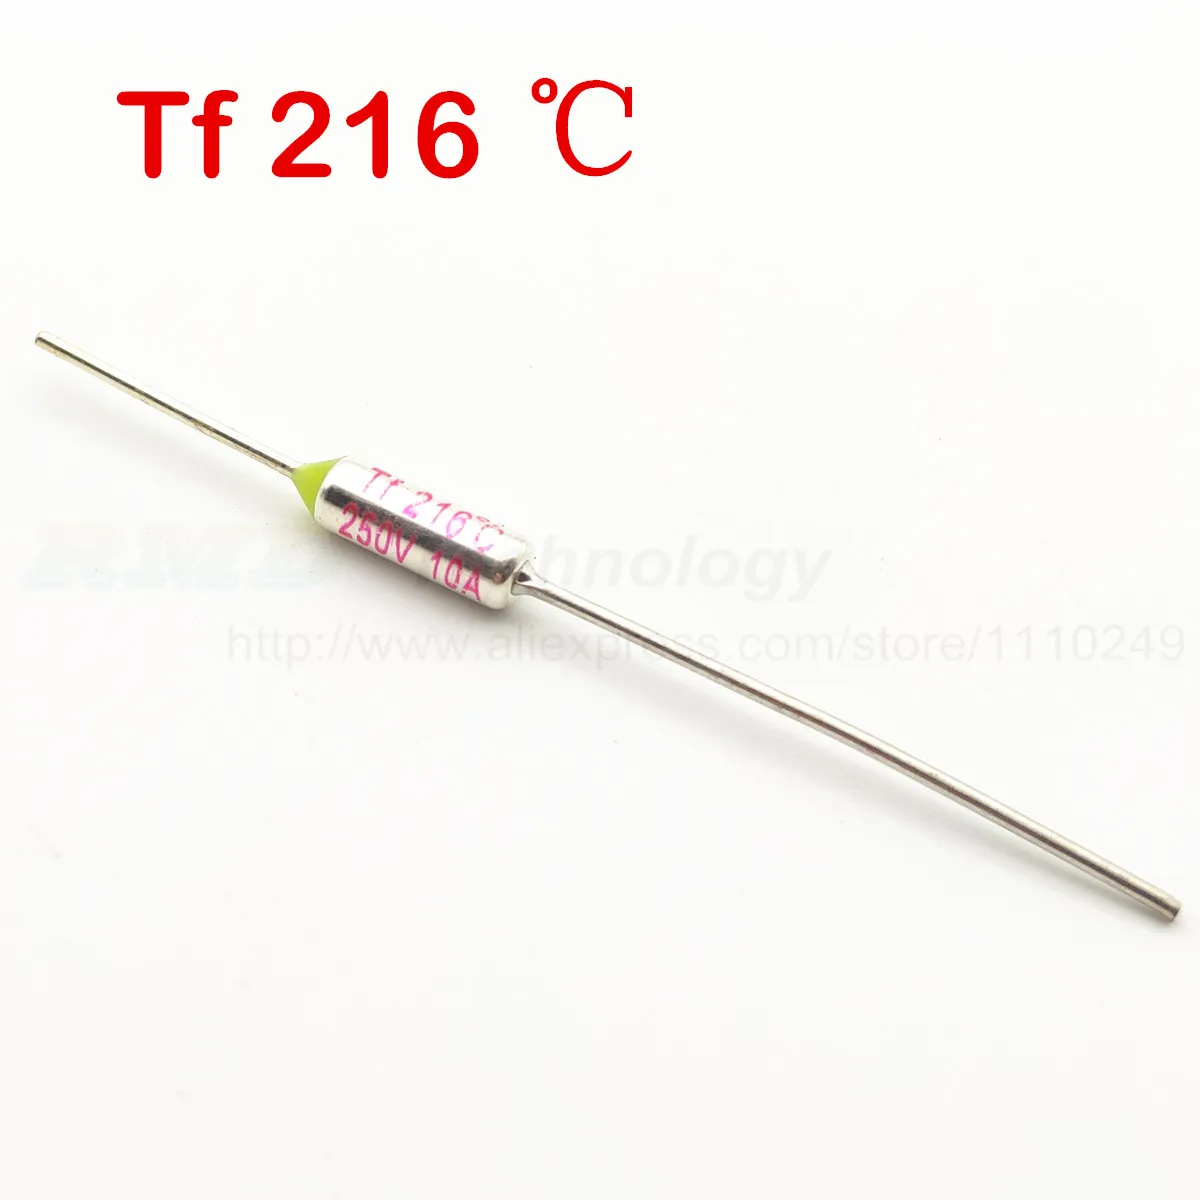 1x Thermal Fuse Sicherung Thermisch Tf 216C 250V 10A 216 ºC 